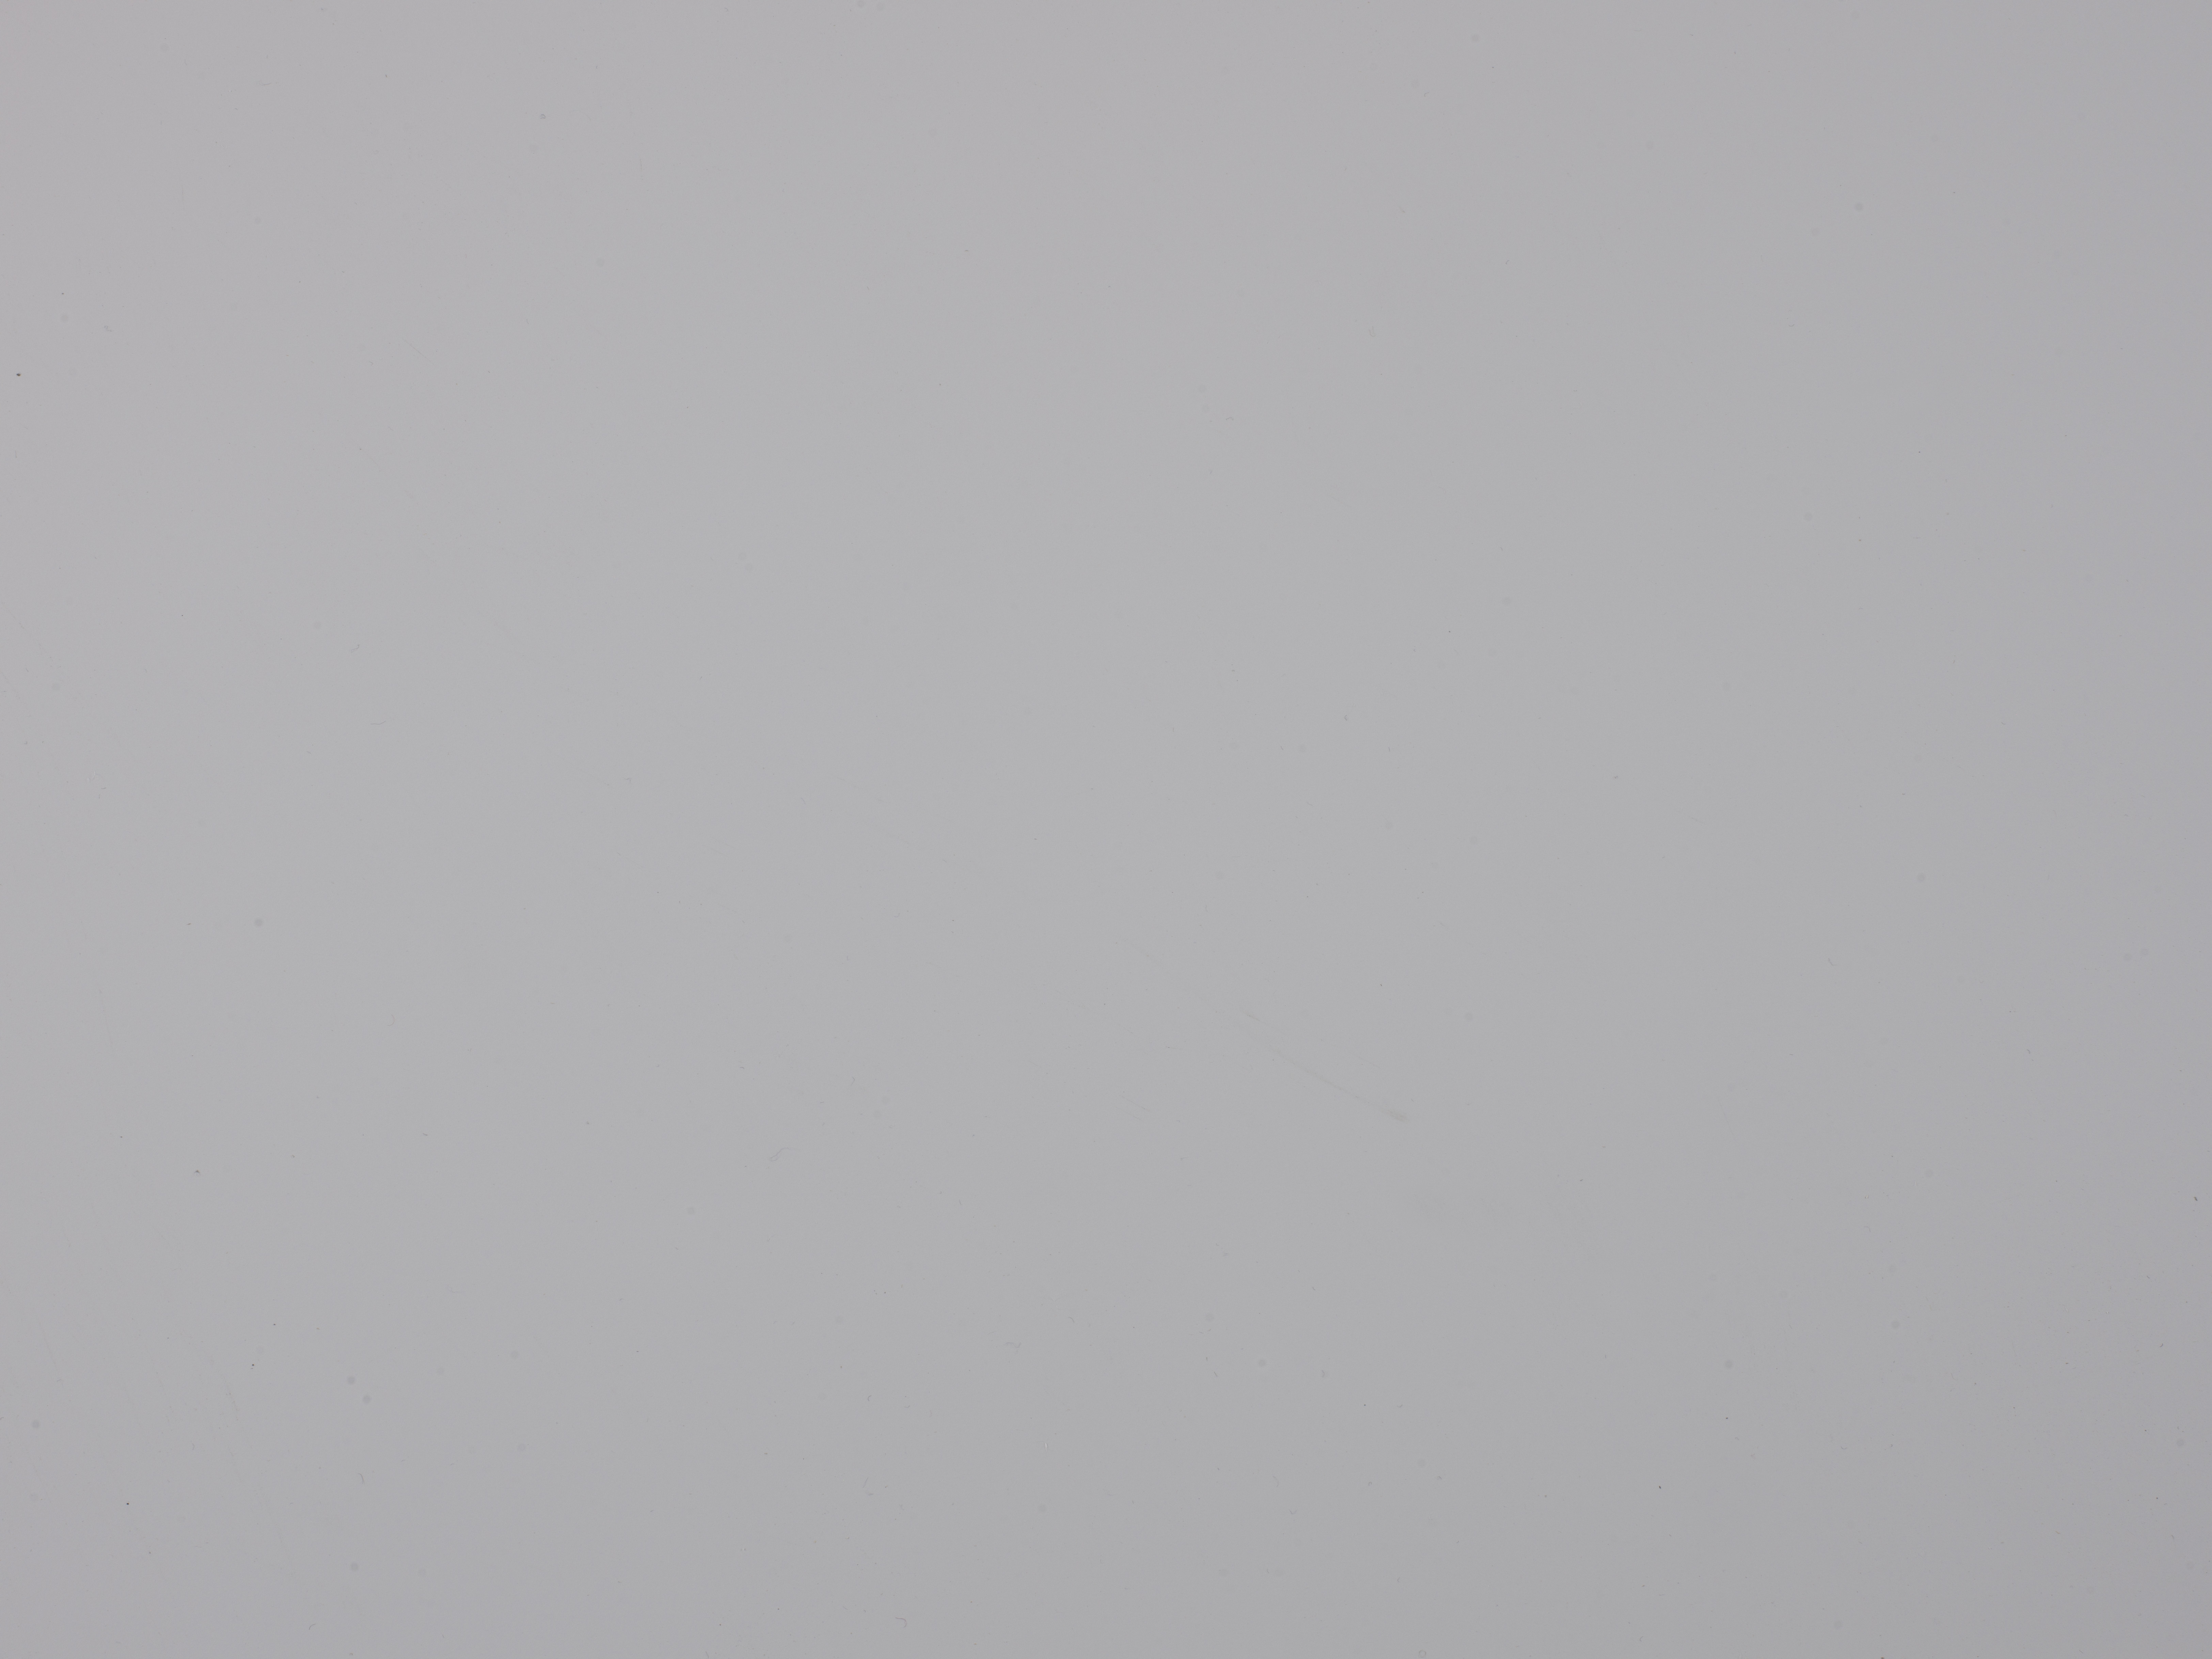 Vysokotlaký laminát Fénix  Arpa - HPLF FENIX 0766 NTM – dekor GRIGIO ZANTE - JH jádro hnědé 